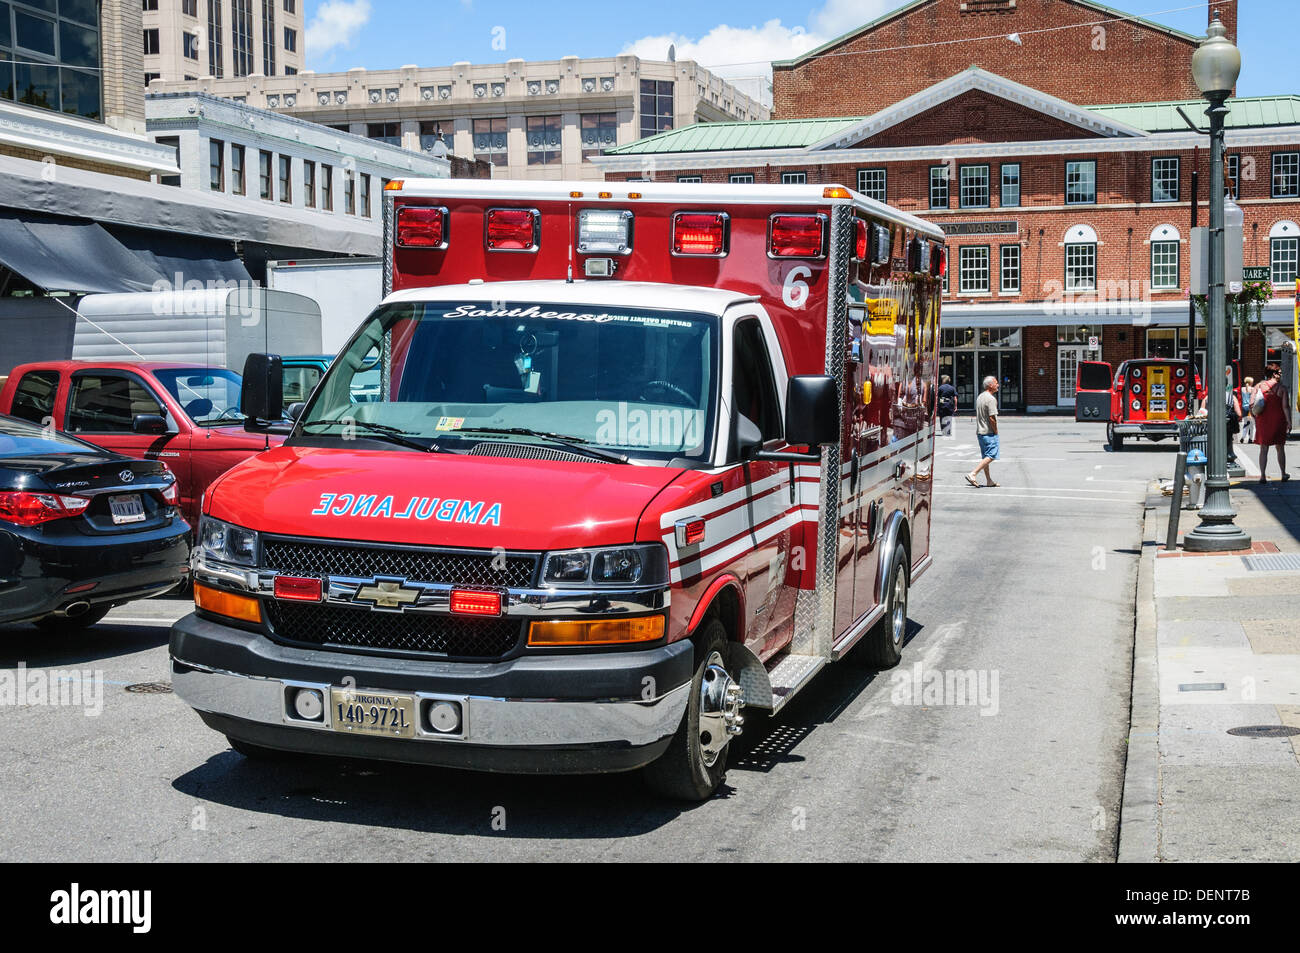 Ambulance responding to an emergency call, Market Street, Roanoke, Virginia Stock Photo